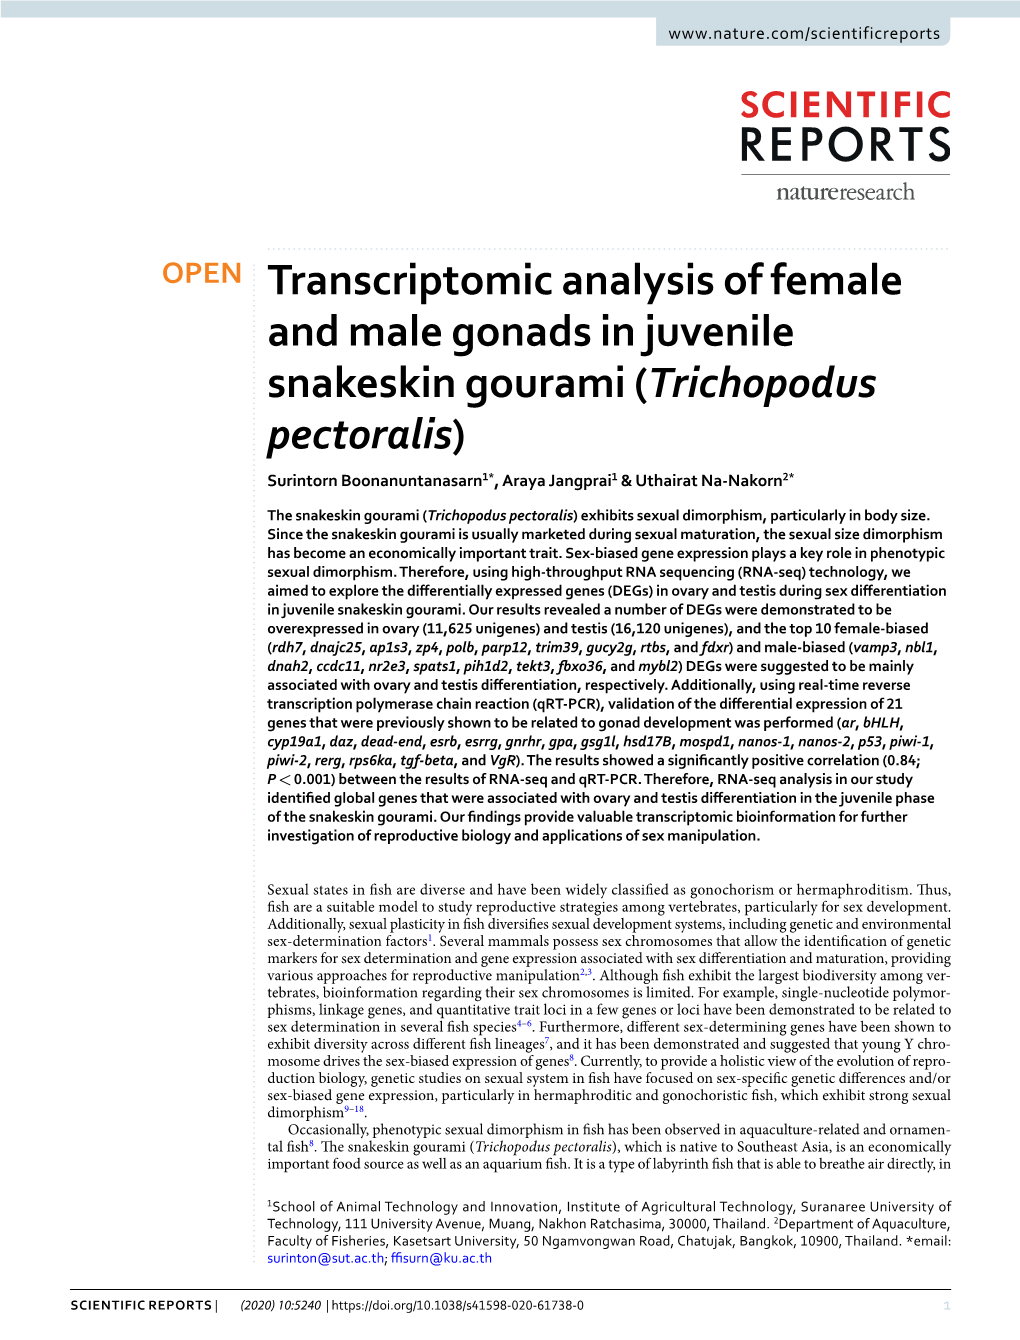 Transcriptomic Analysis of Female and Male Gonads in Juvenile Snakeskin